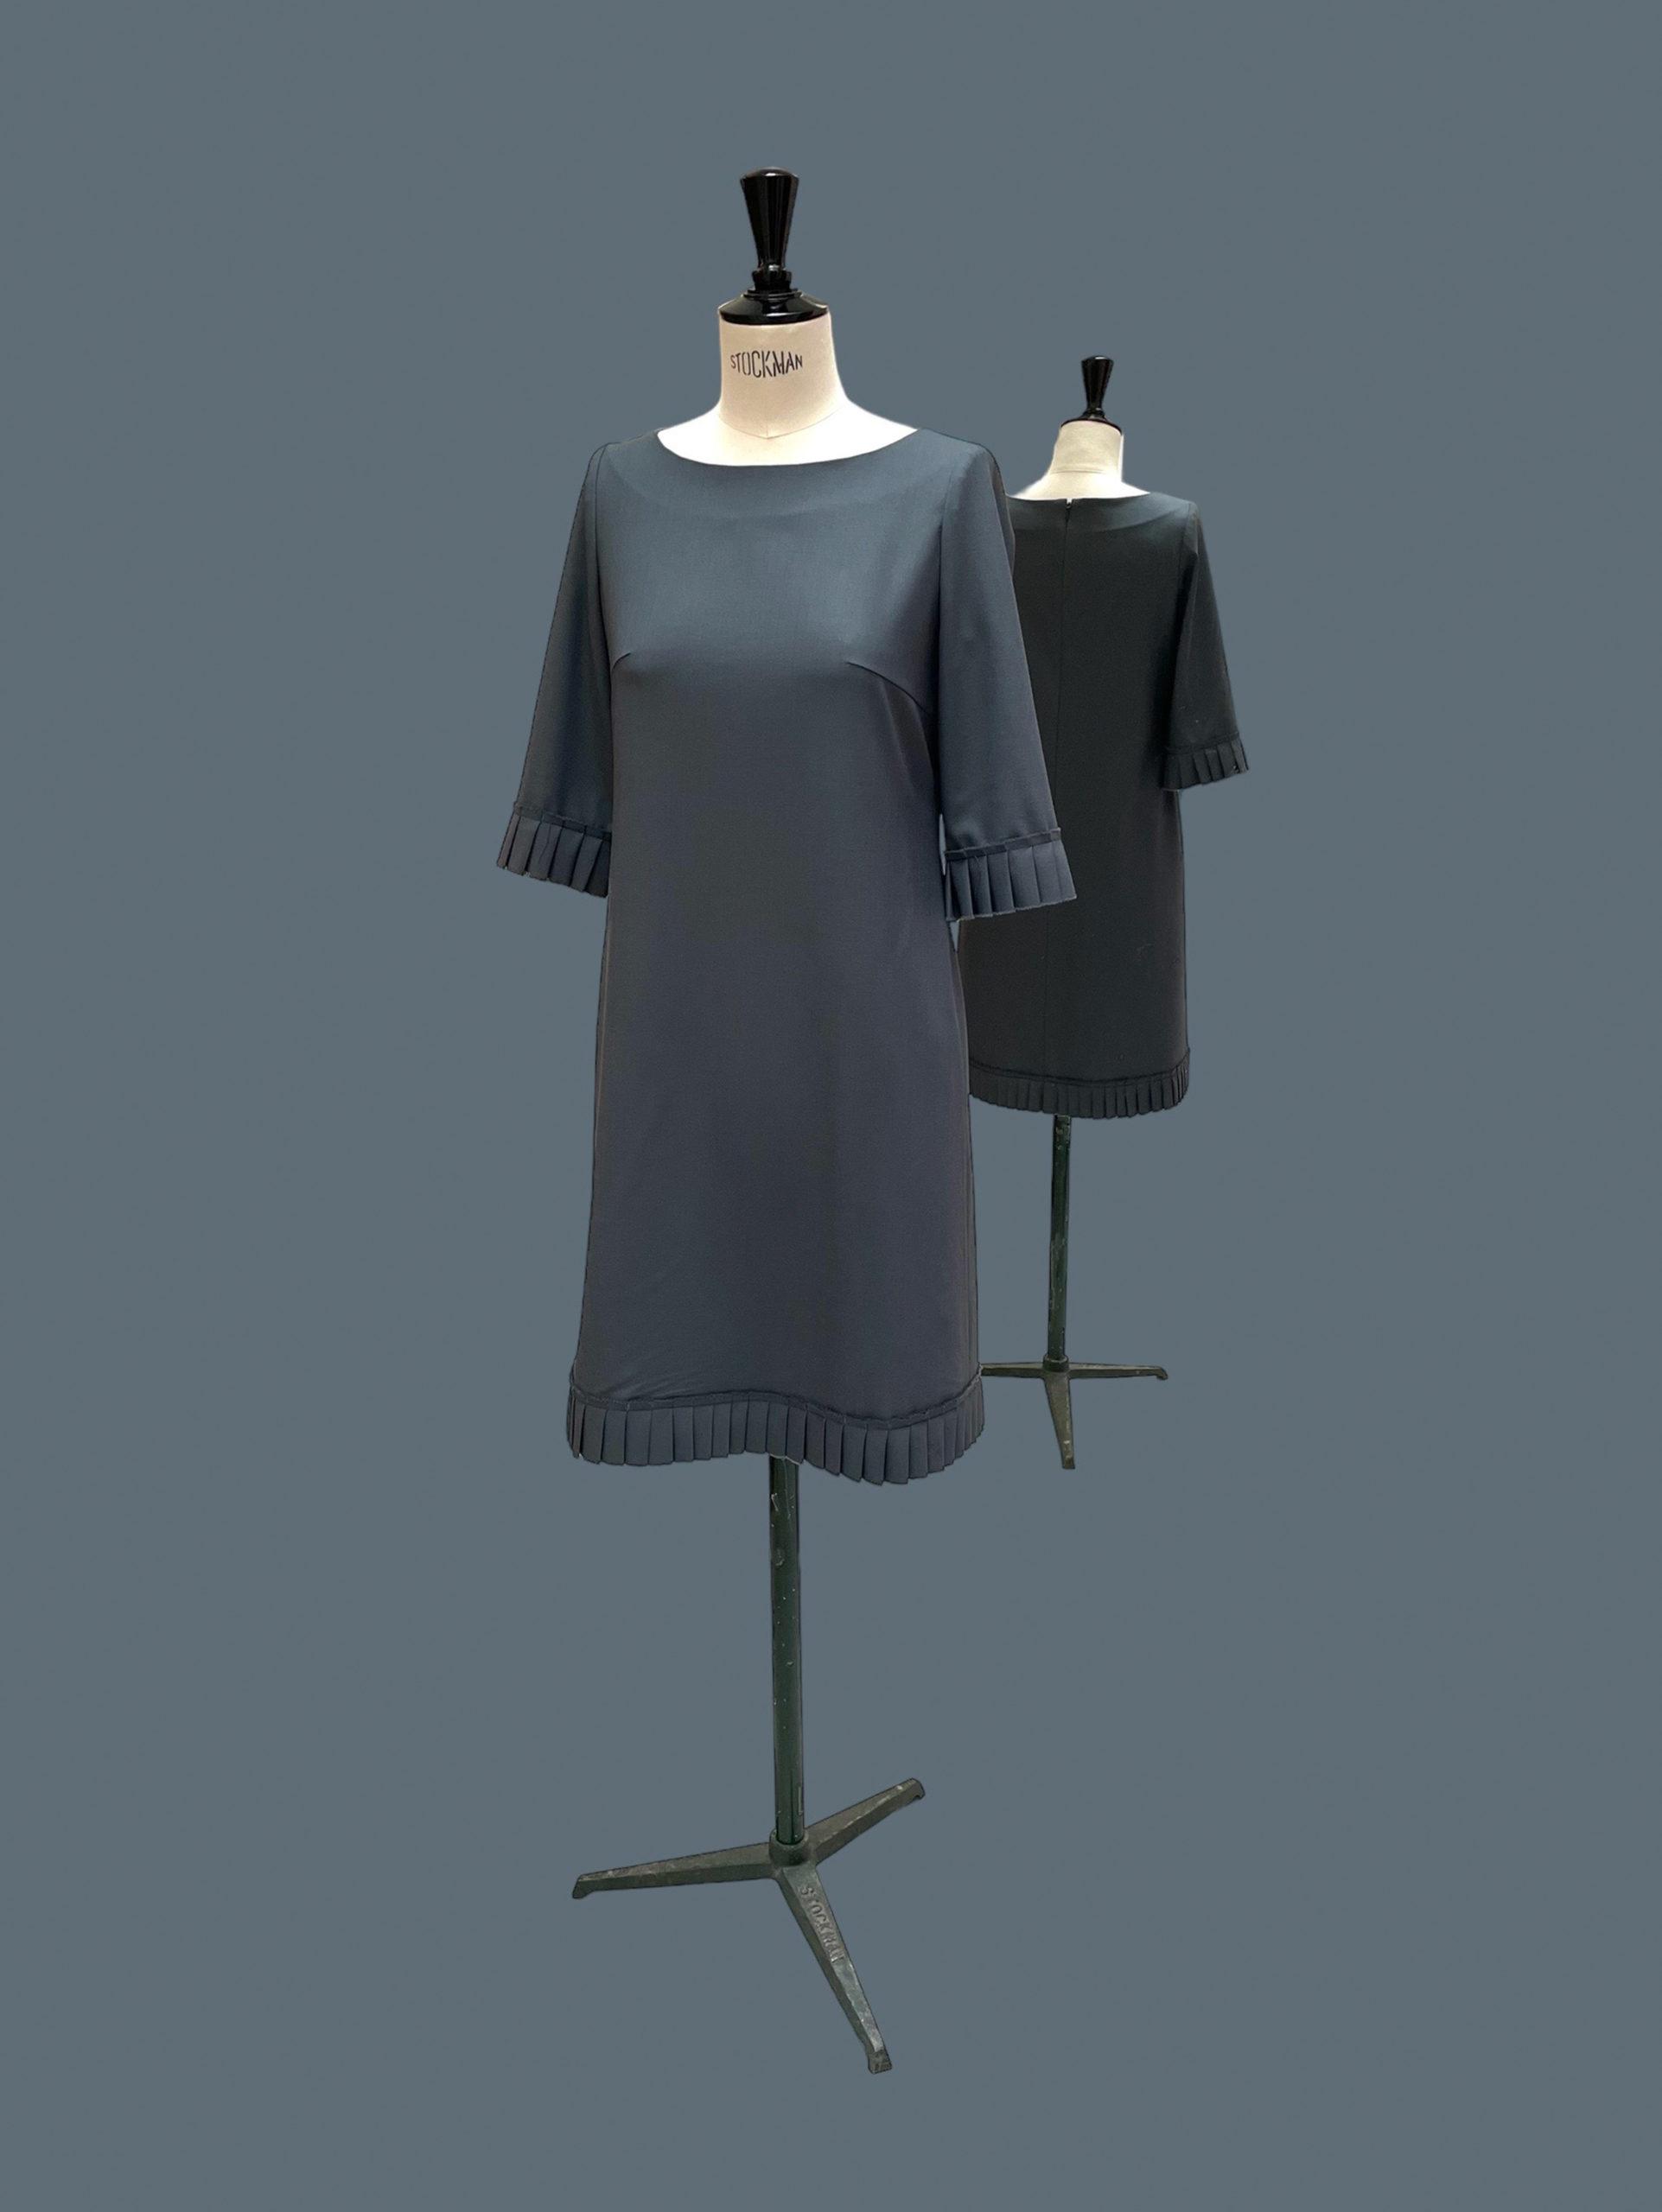 Audrey dress, ANNA RUOHONEN Paris, made-to-order